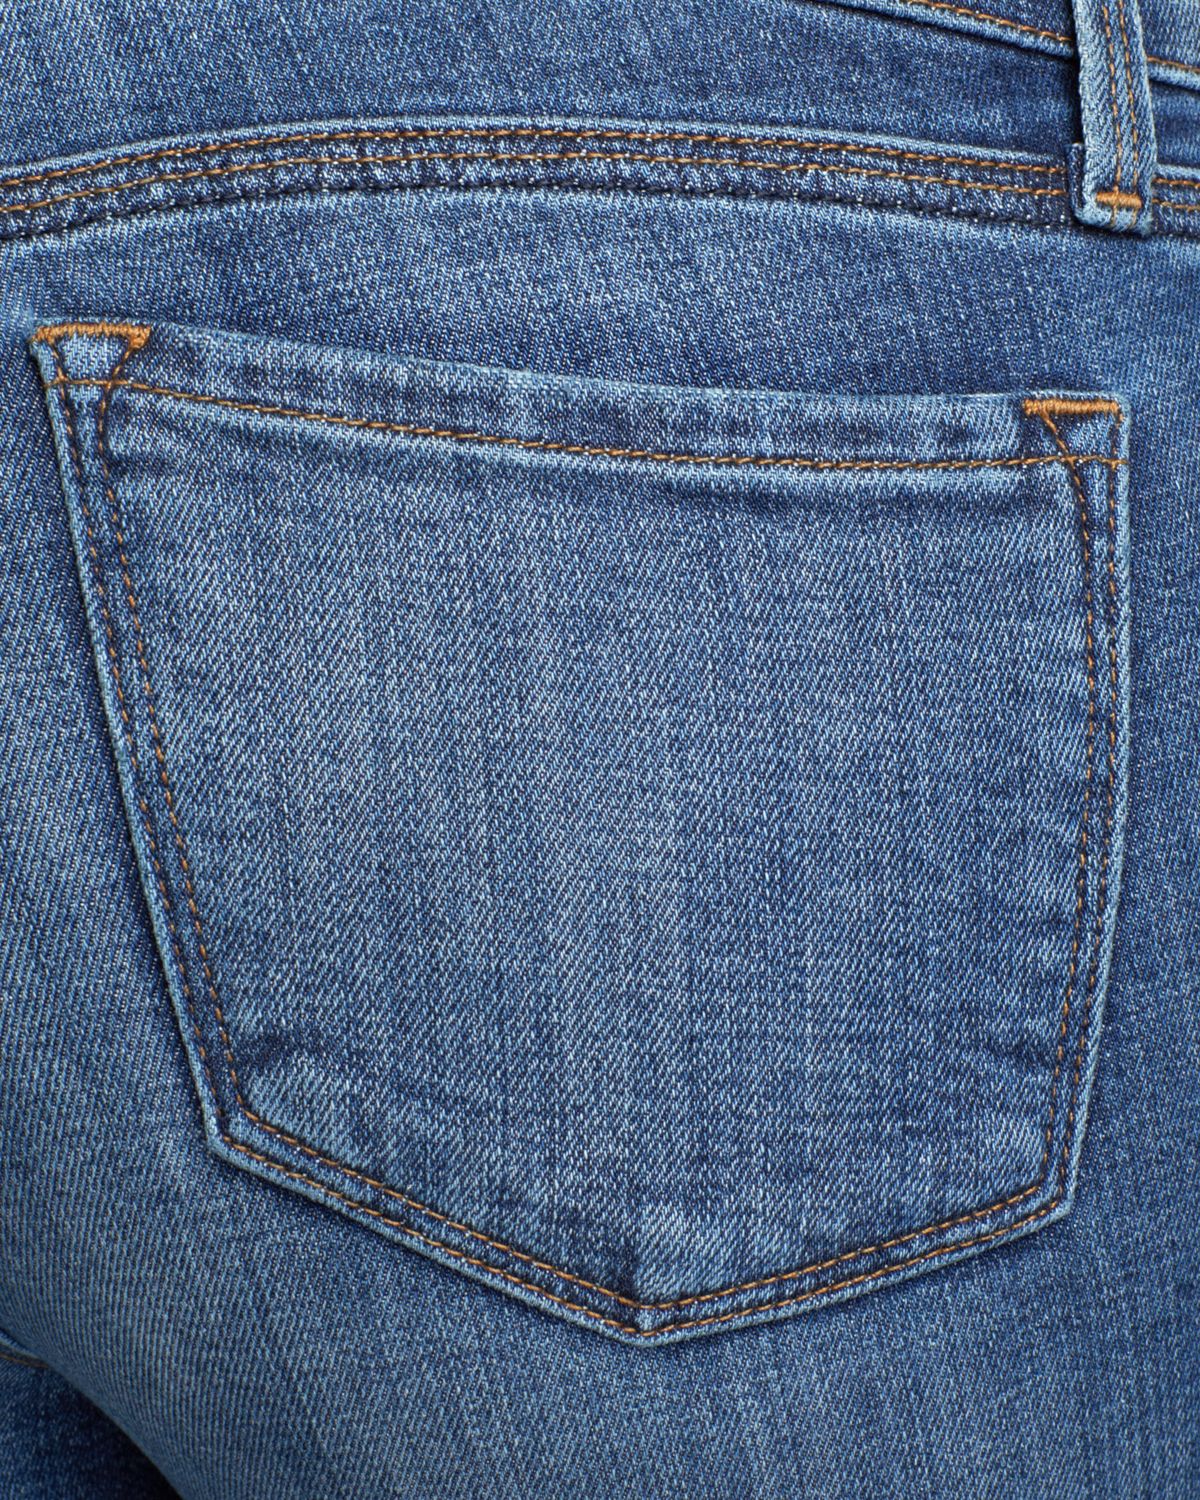 J Brand Denim Jeans 811 Mid Rise Skinny in Infinity in Blue - Lyst